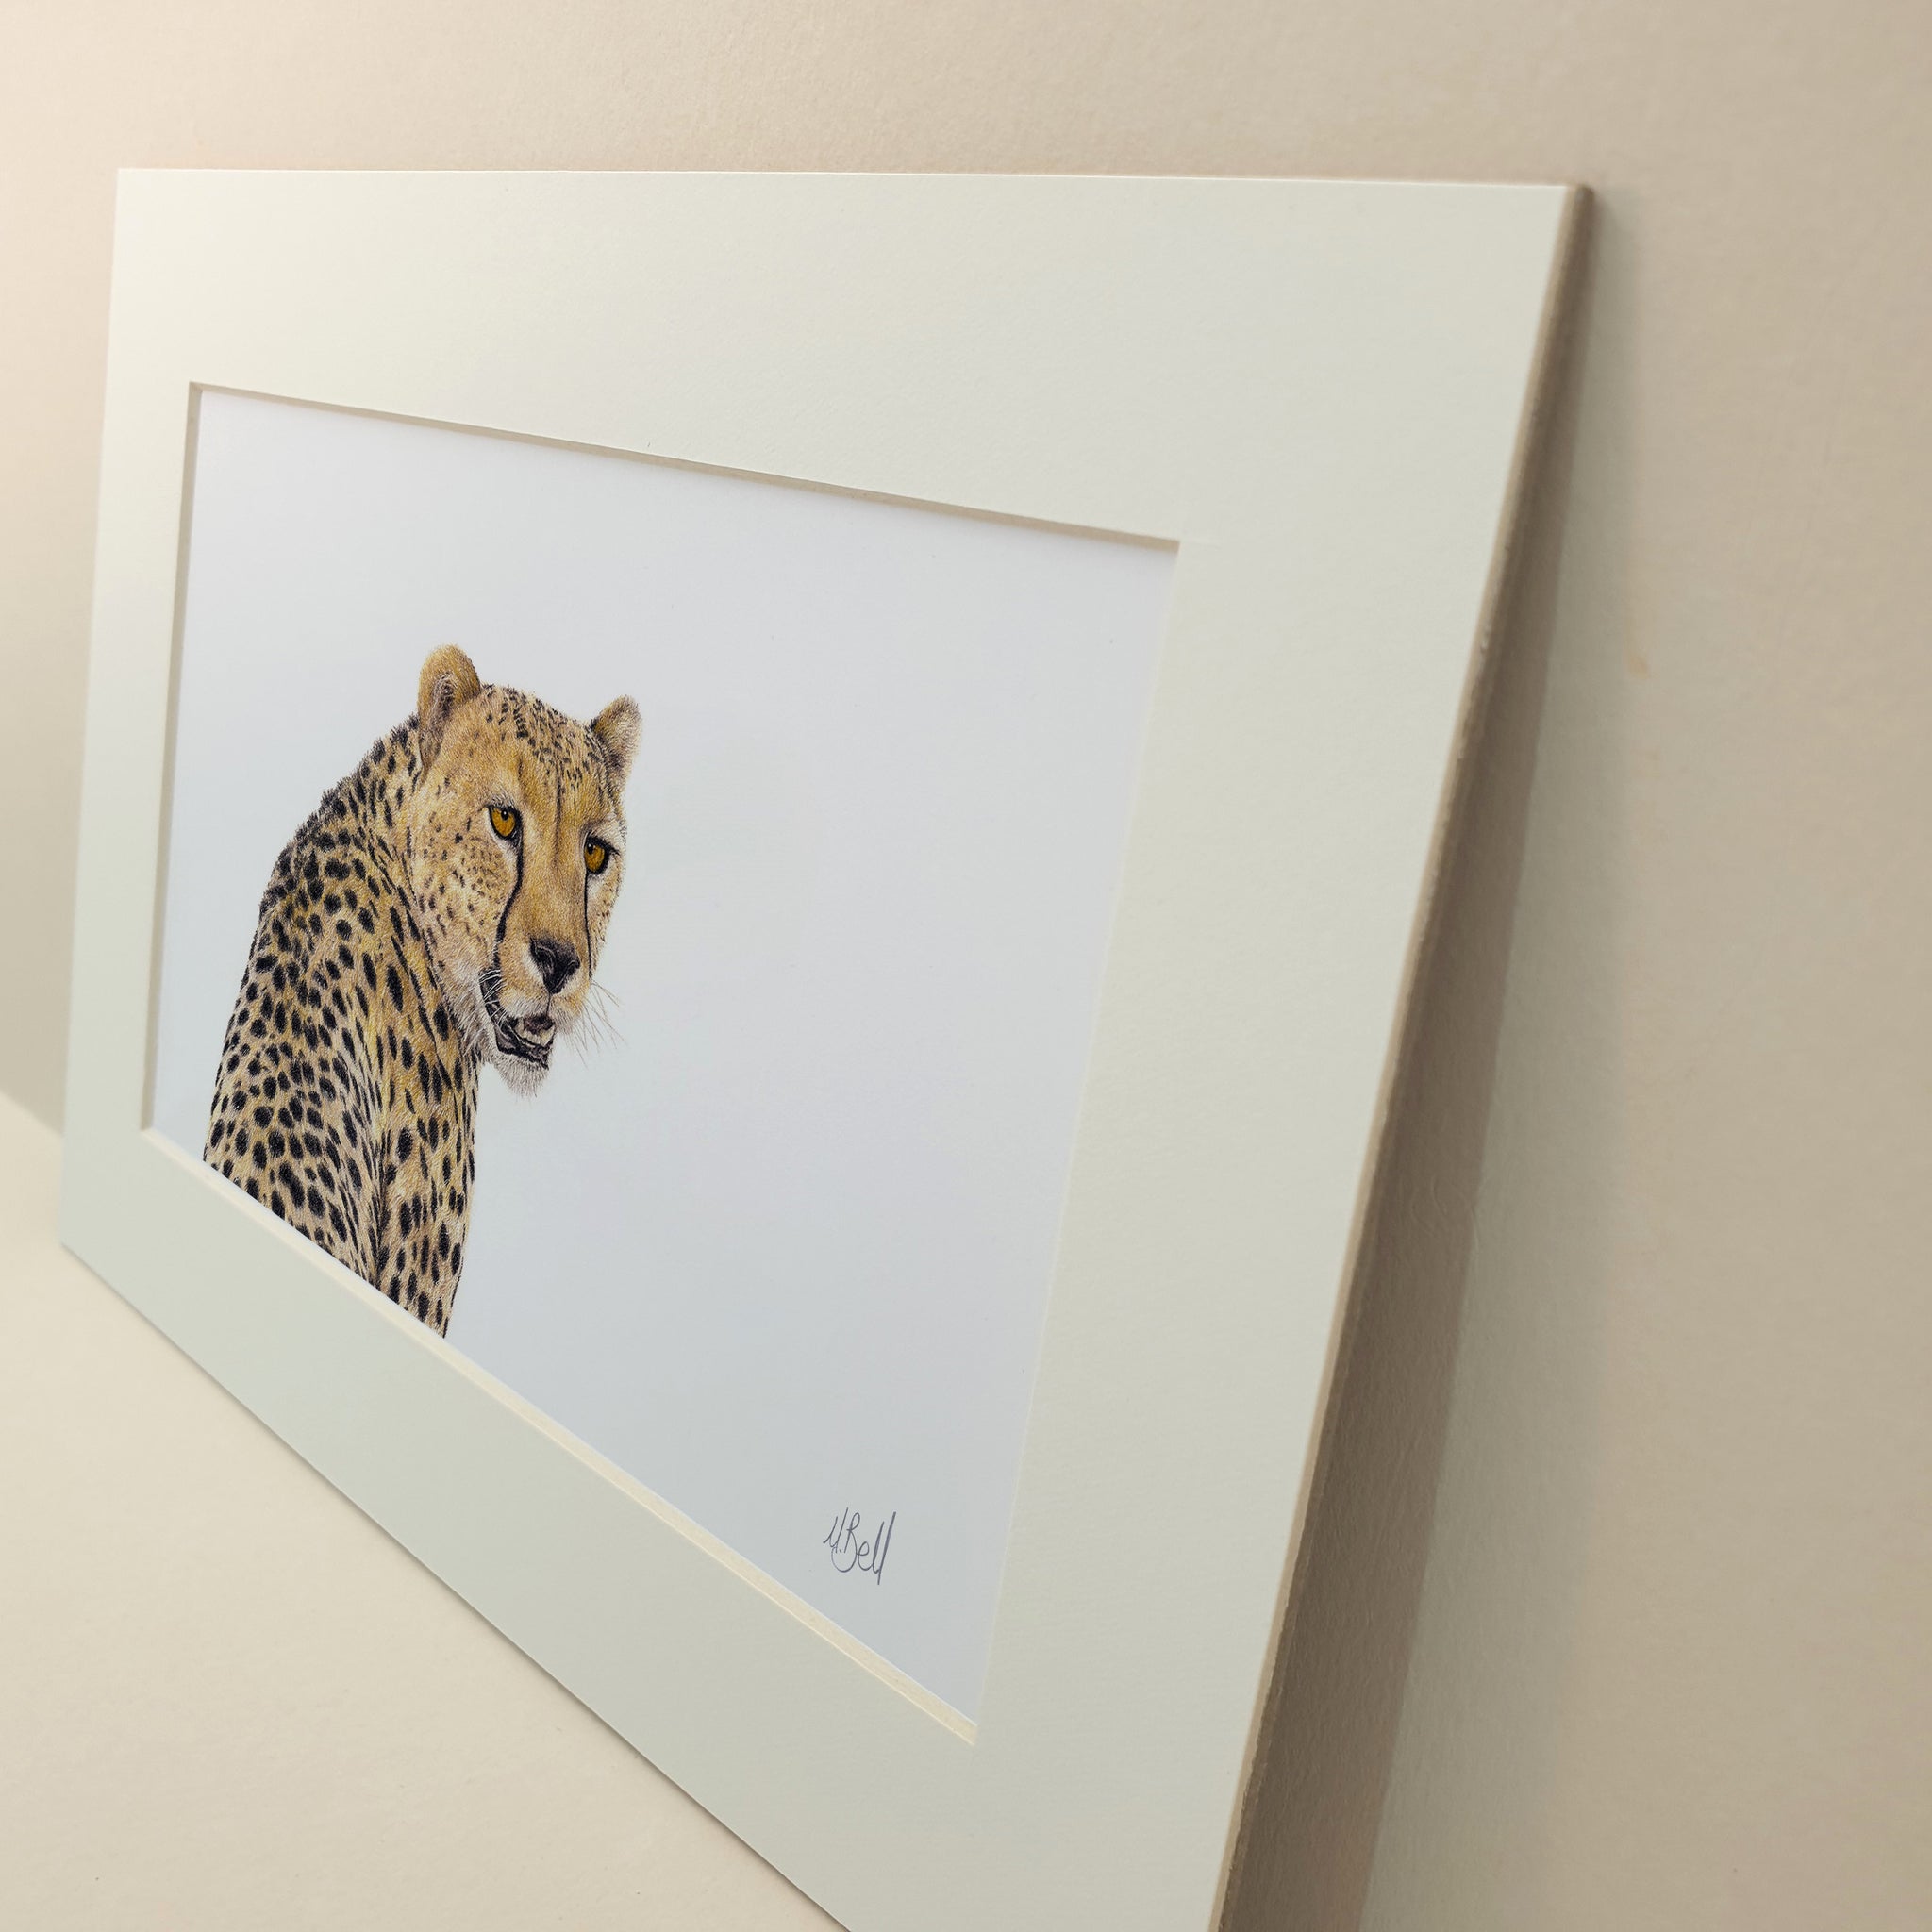 Cheetah portrait artwork